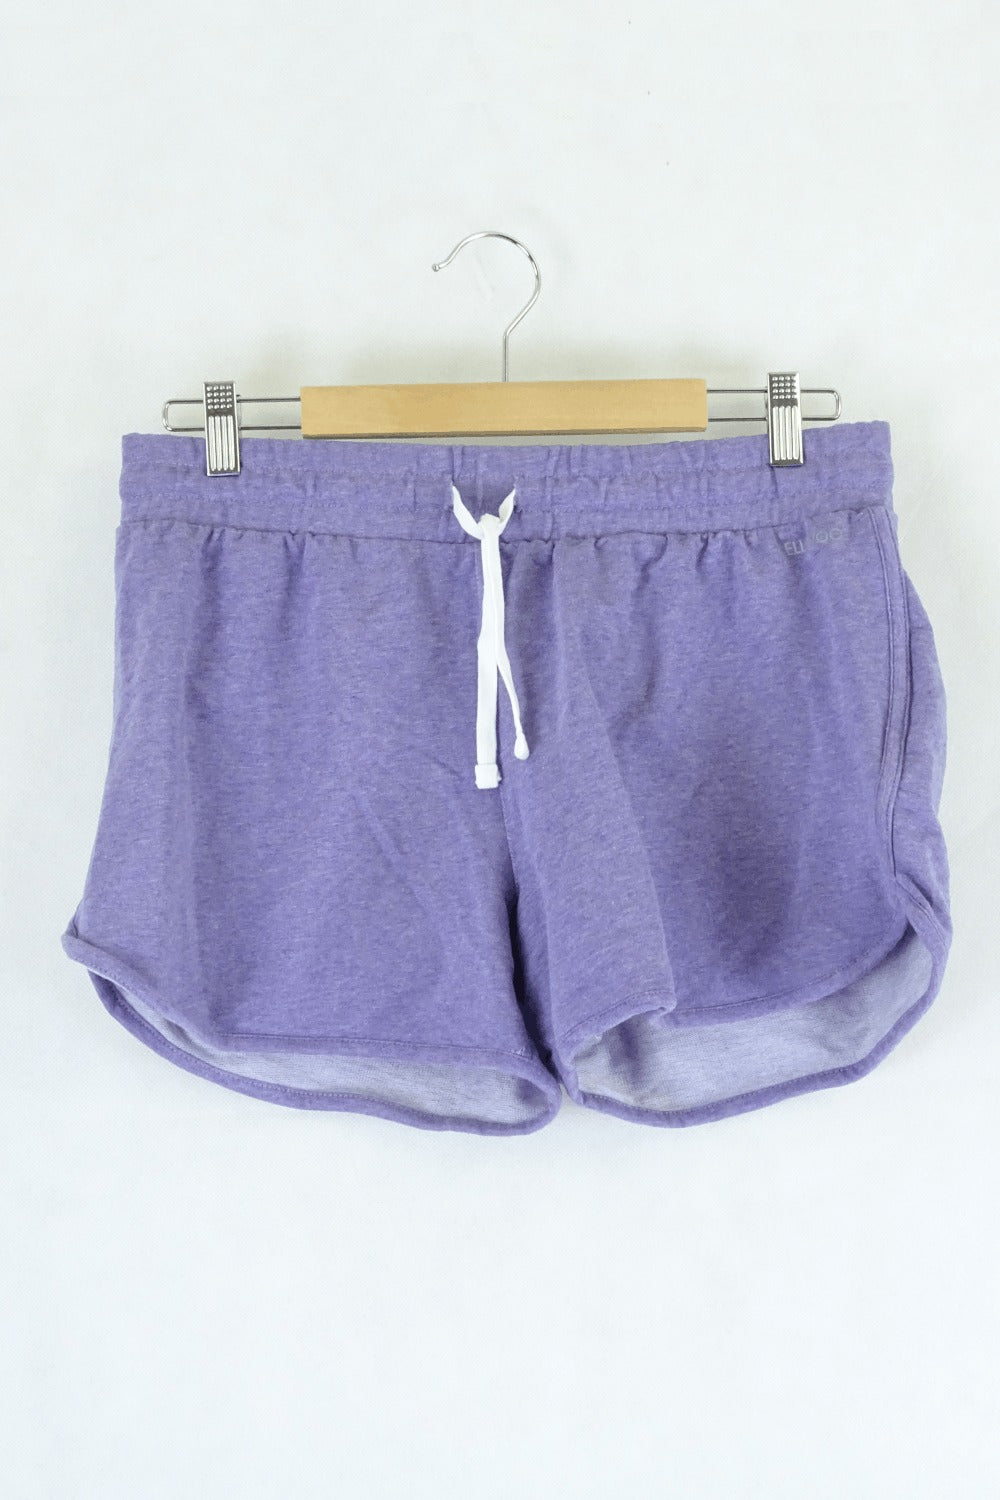 Ell & Voo Purple Shorts M - Reluv Clothing Australia